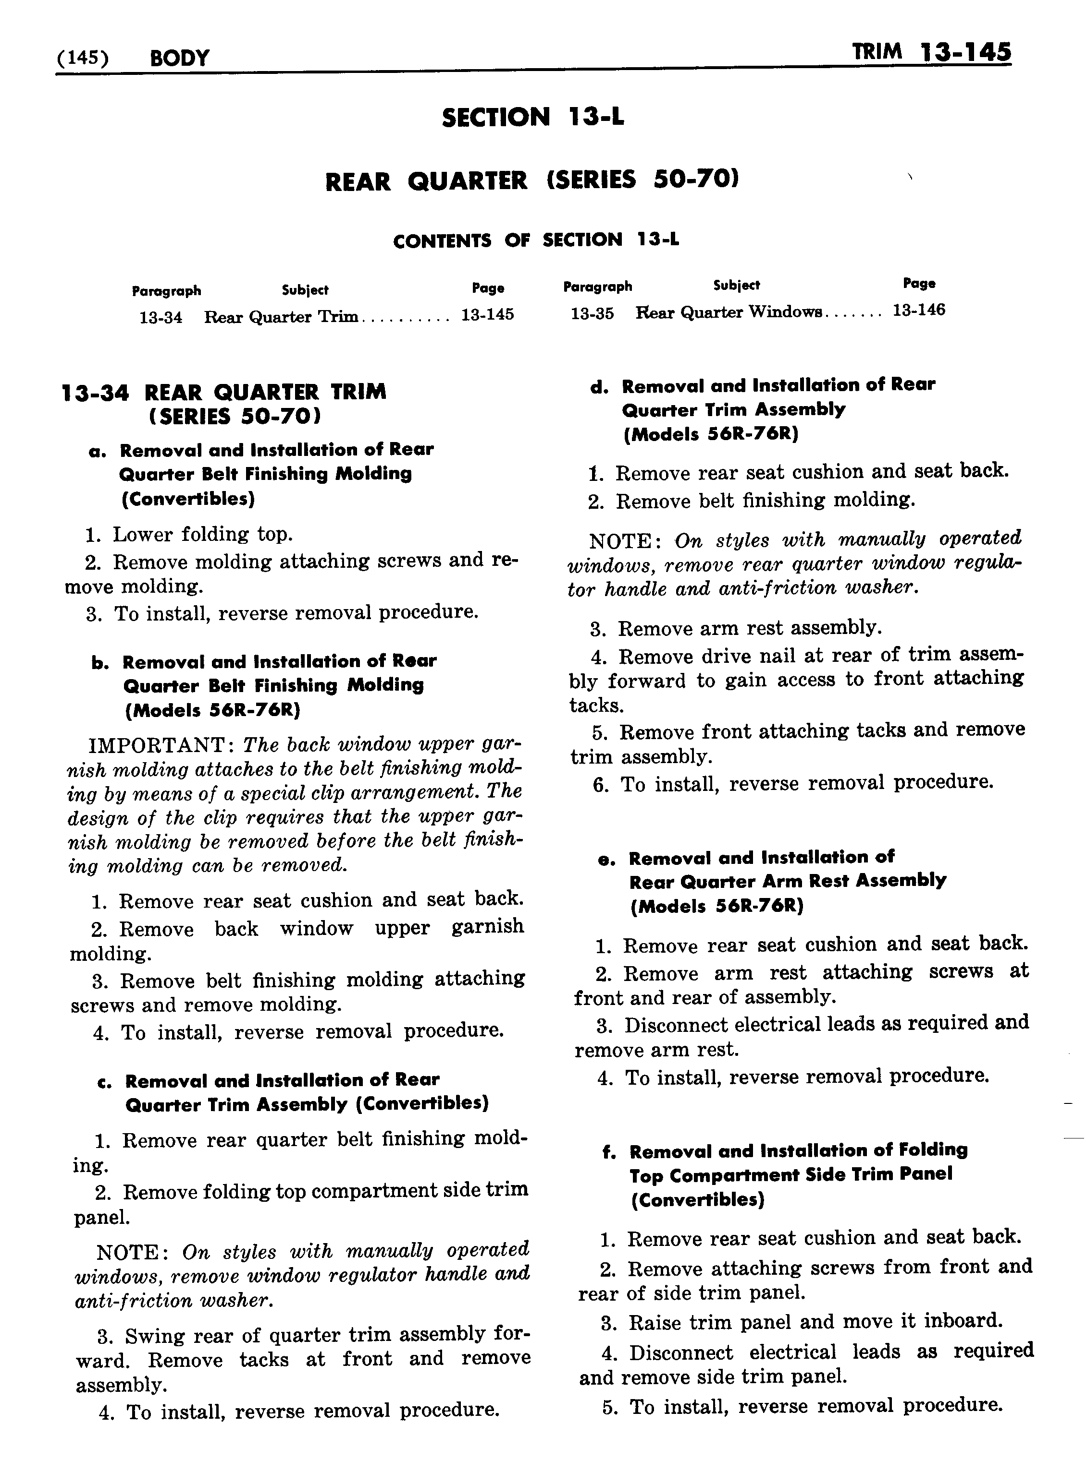 n_1957 Buick Body Service Manual-147-147.jpg